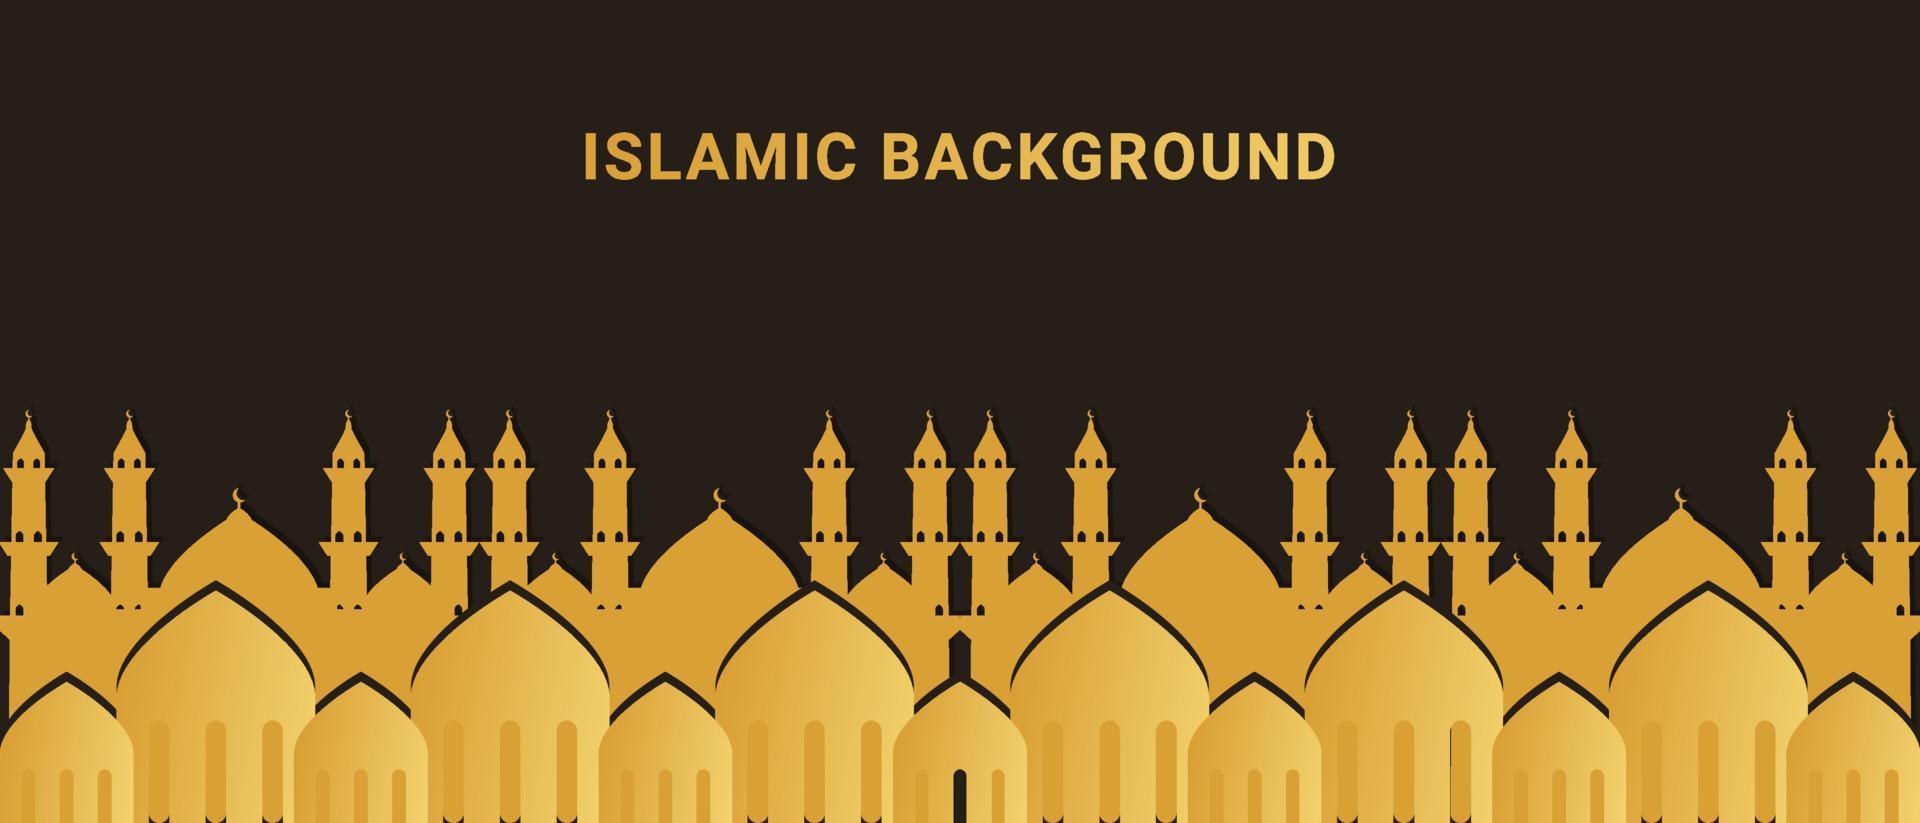 Ramadan Kareem Background. Islamic Background. vector